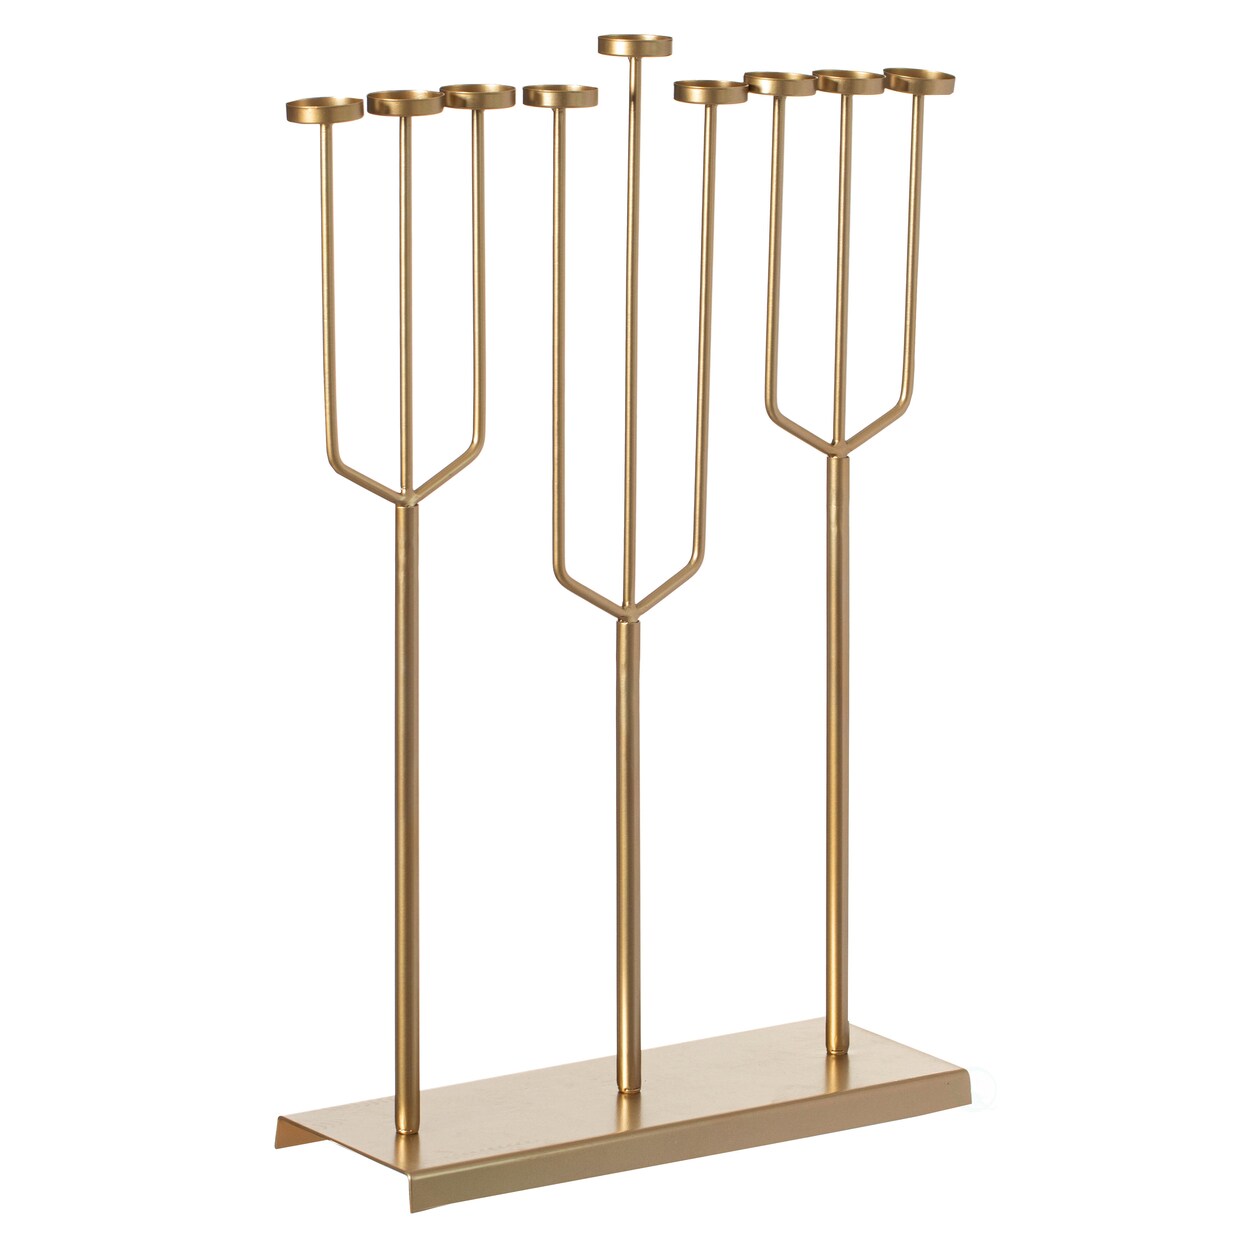 Vintiquewise Modern Design Hanukkah Menorah Exceptional presentational piece 9 Branch Tea Light Candle Holders